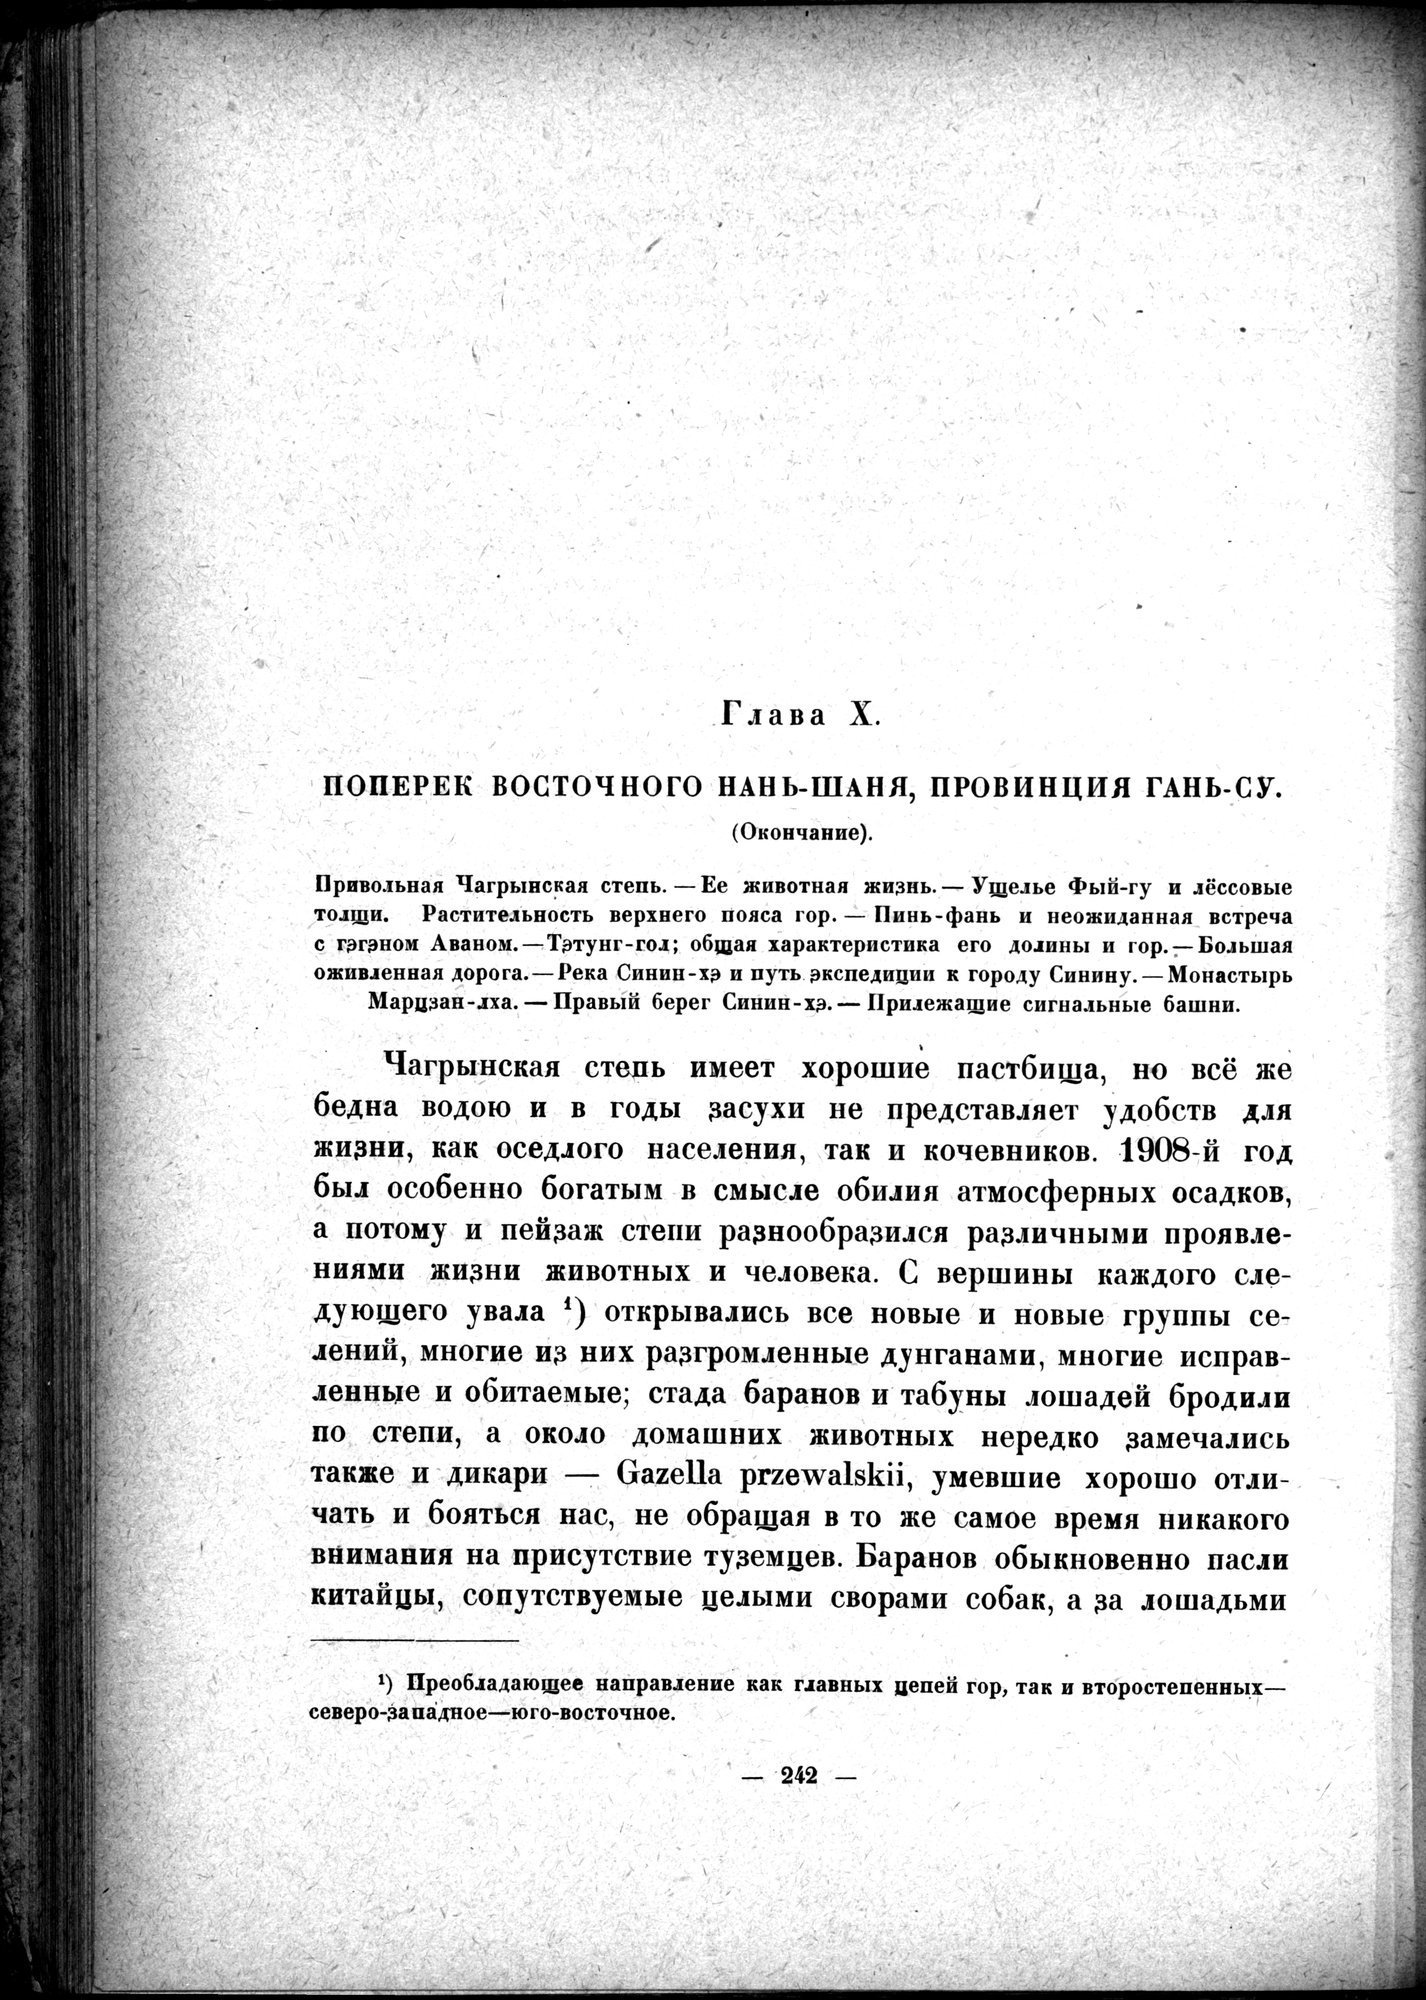 Mongoliya i Amdo i mertby gorod Khara-Khoto : vol.1 / Page 288 (Grayscale High Resolution Image)